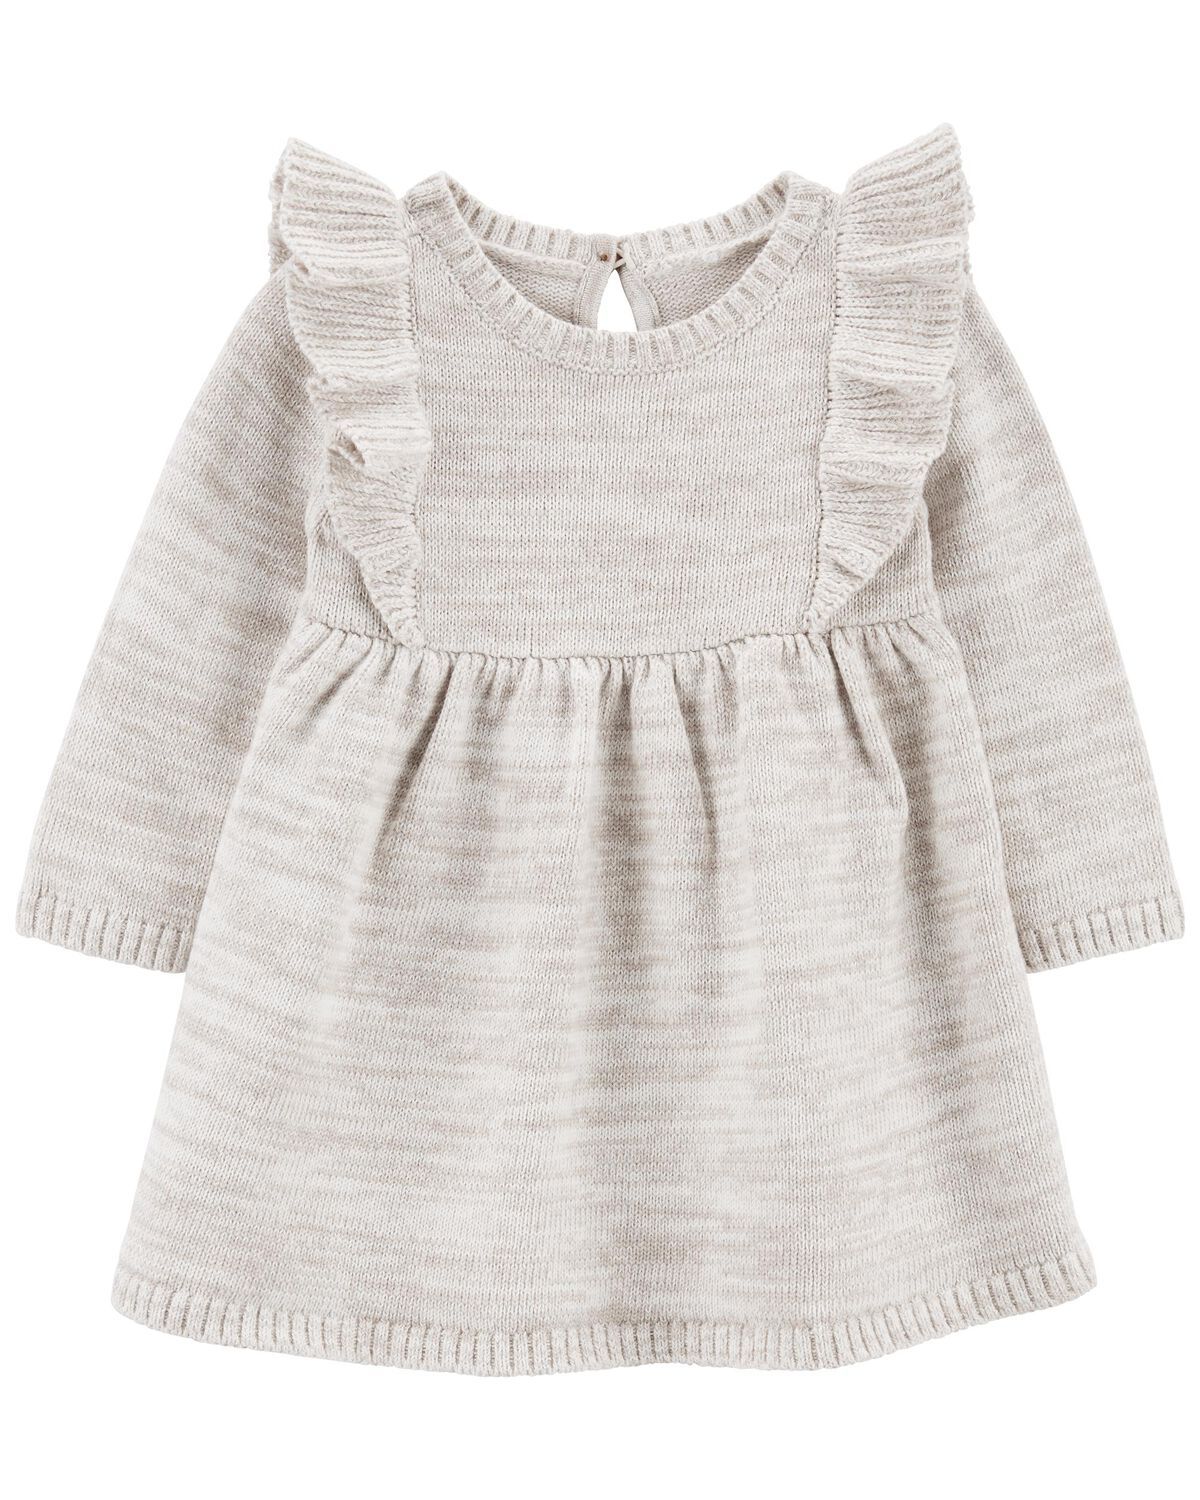 Grey Baby Long-Sleeve Sweater Dress | carters.com | Carter's